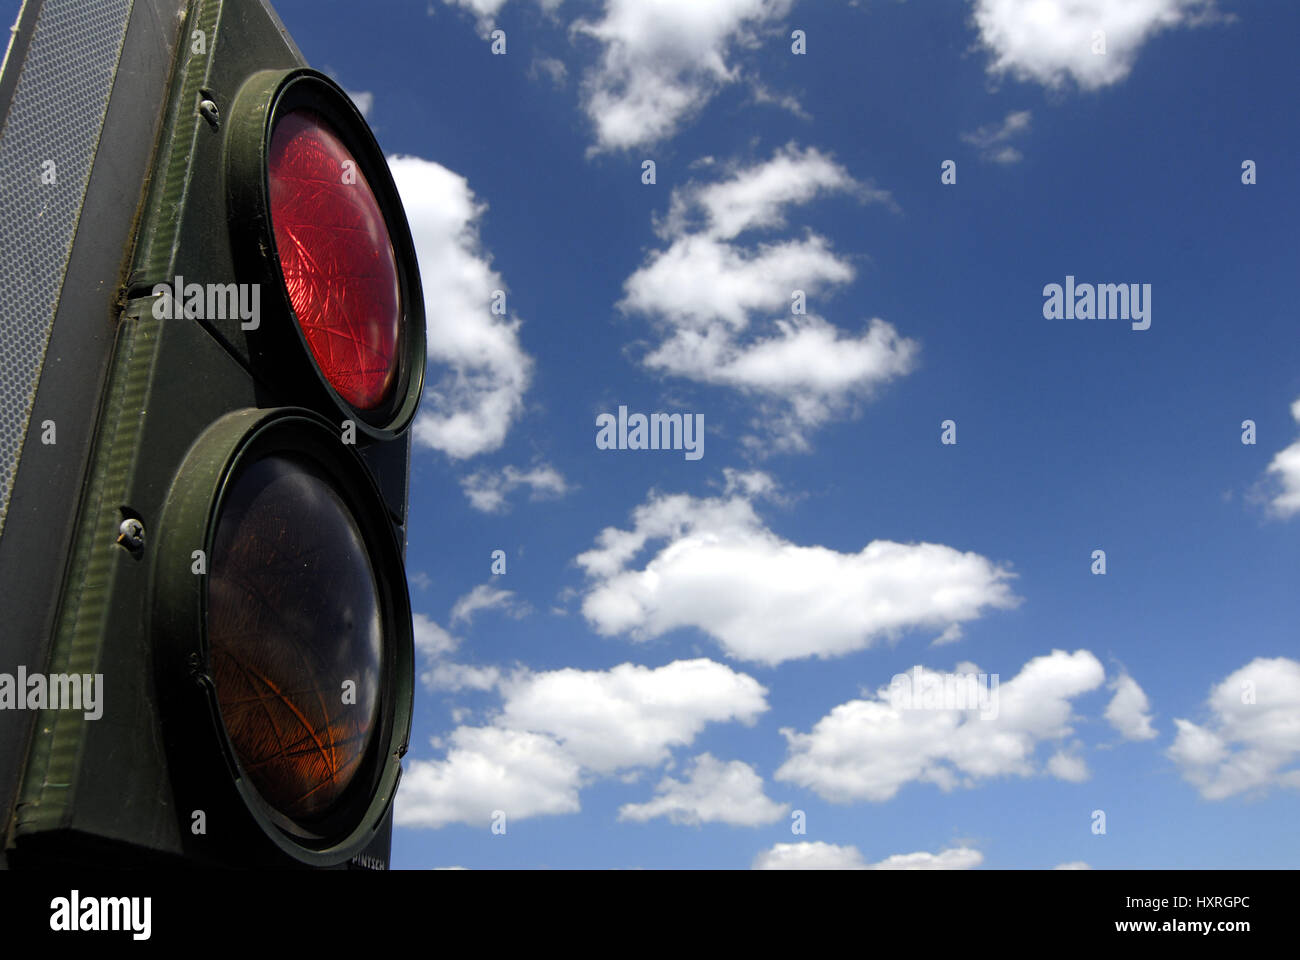 Red light, red, light, stop, hold, traffic light, traffic light, traffic lights, shine, stop blue, sky, clouds, stop, there stop, road traffic light,  Stock Photo